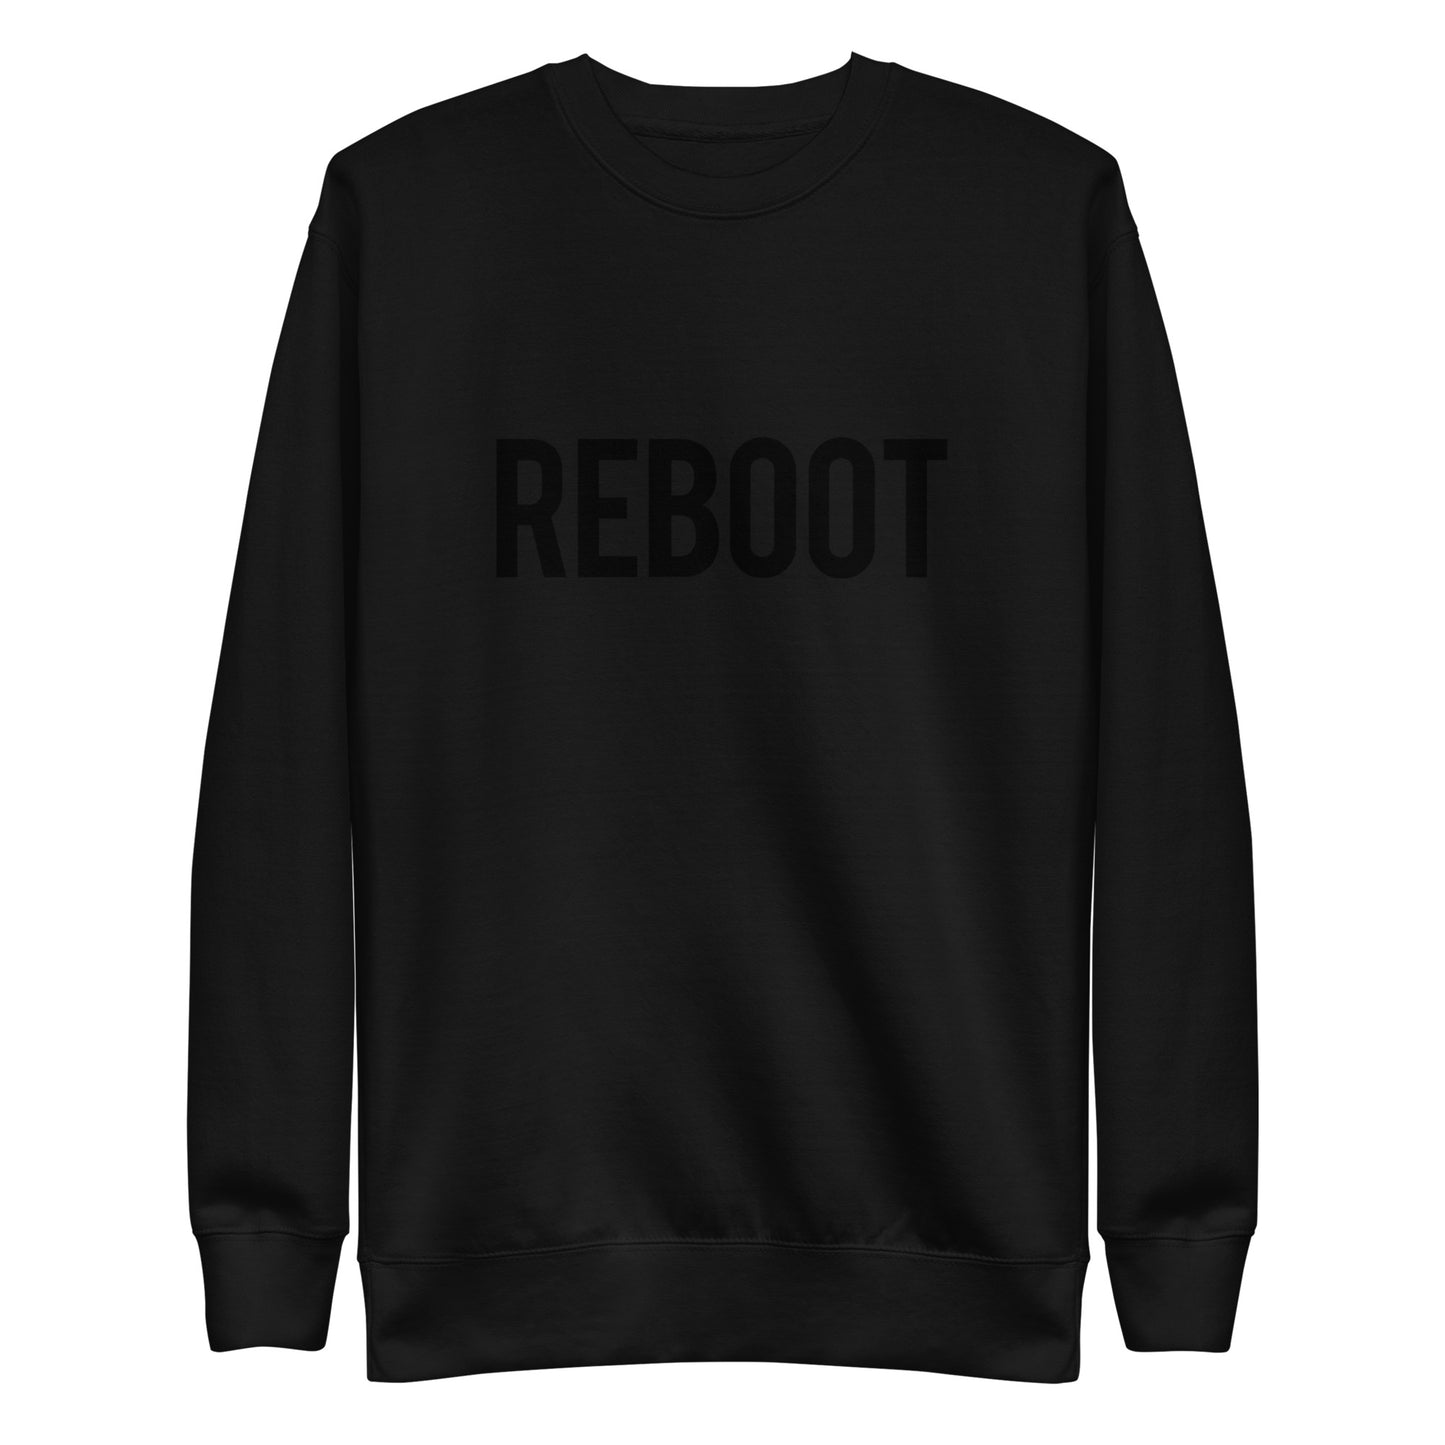 REBOOT Black Premium Sweatshirt